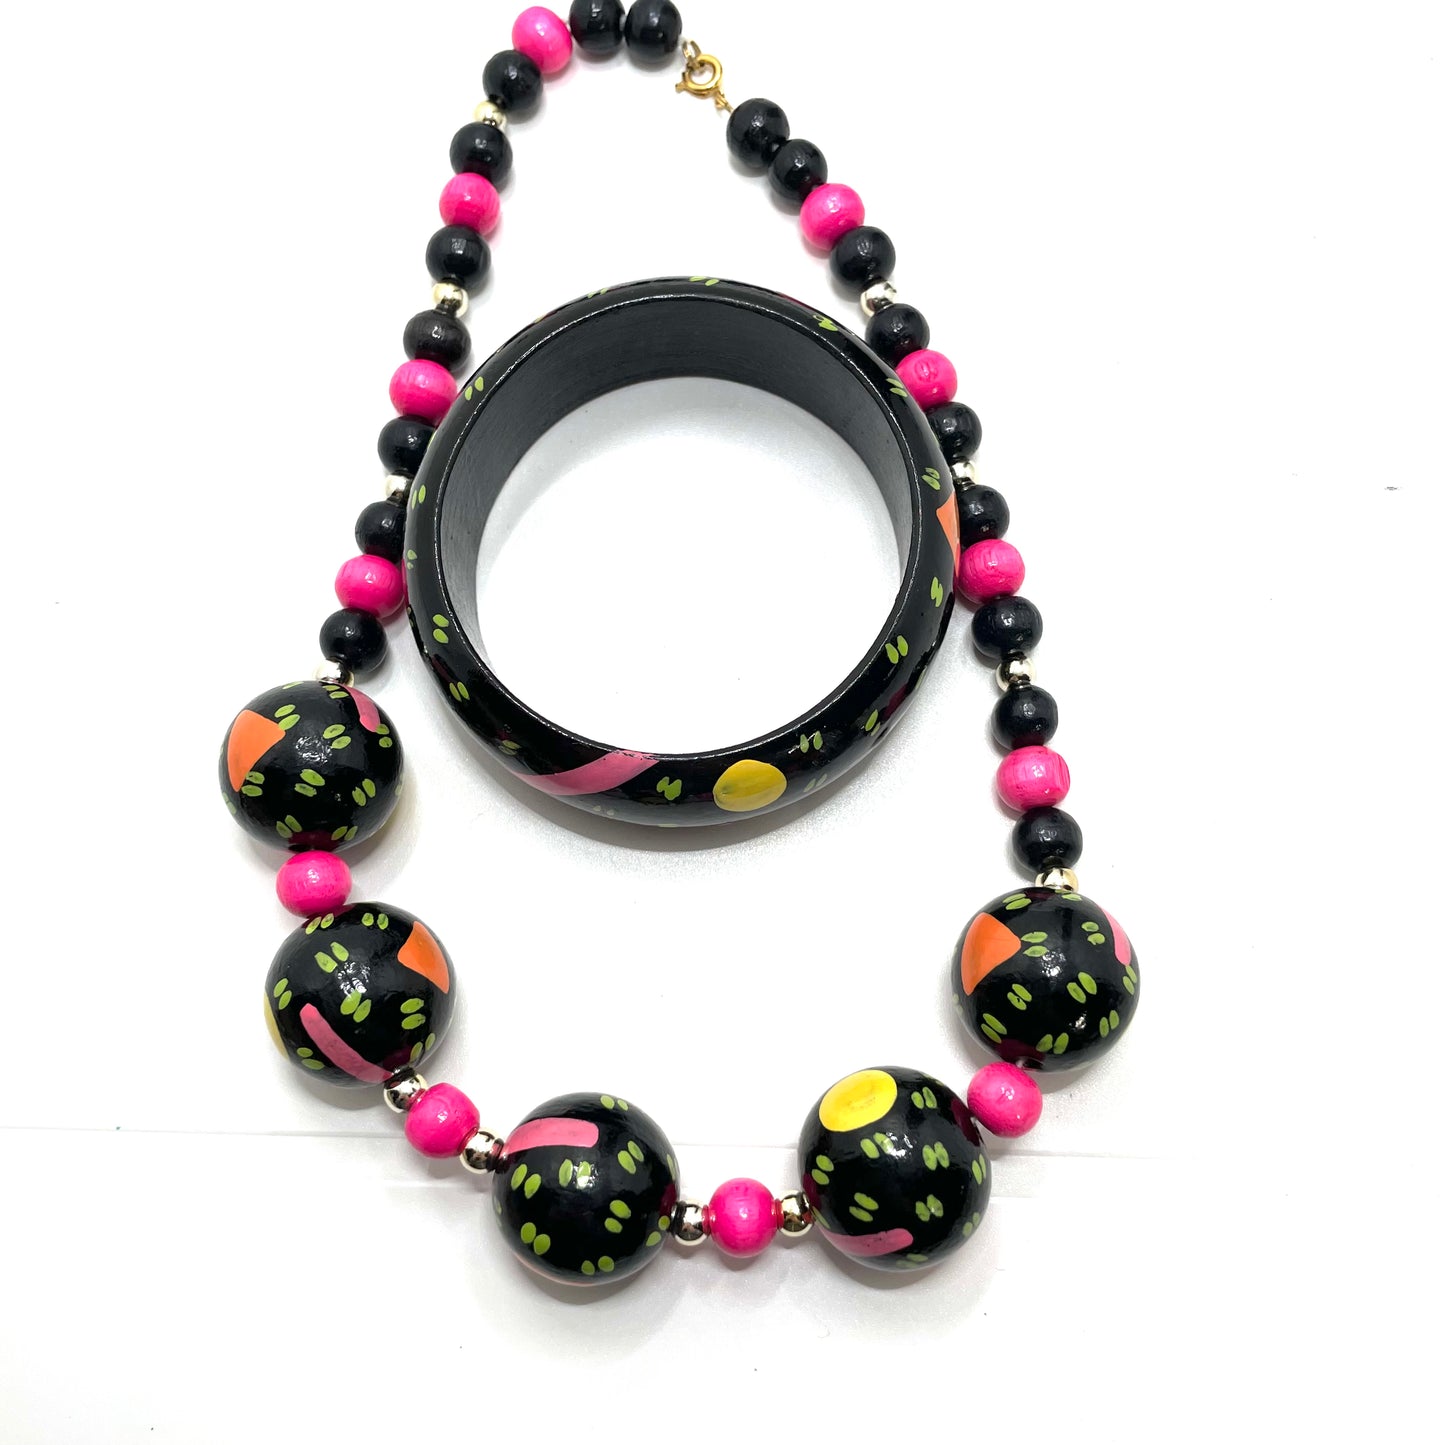 Vintage 1980s Neon Bangle Bracelet & Necklace